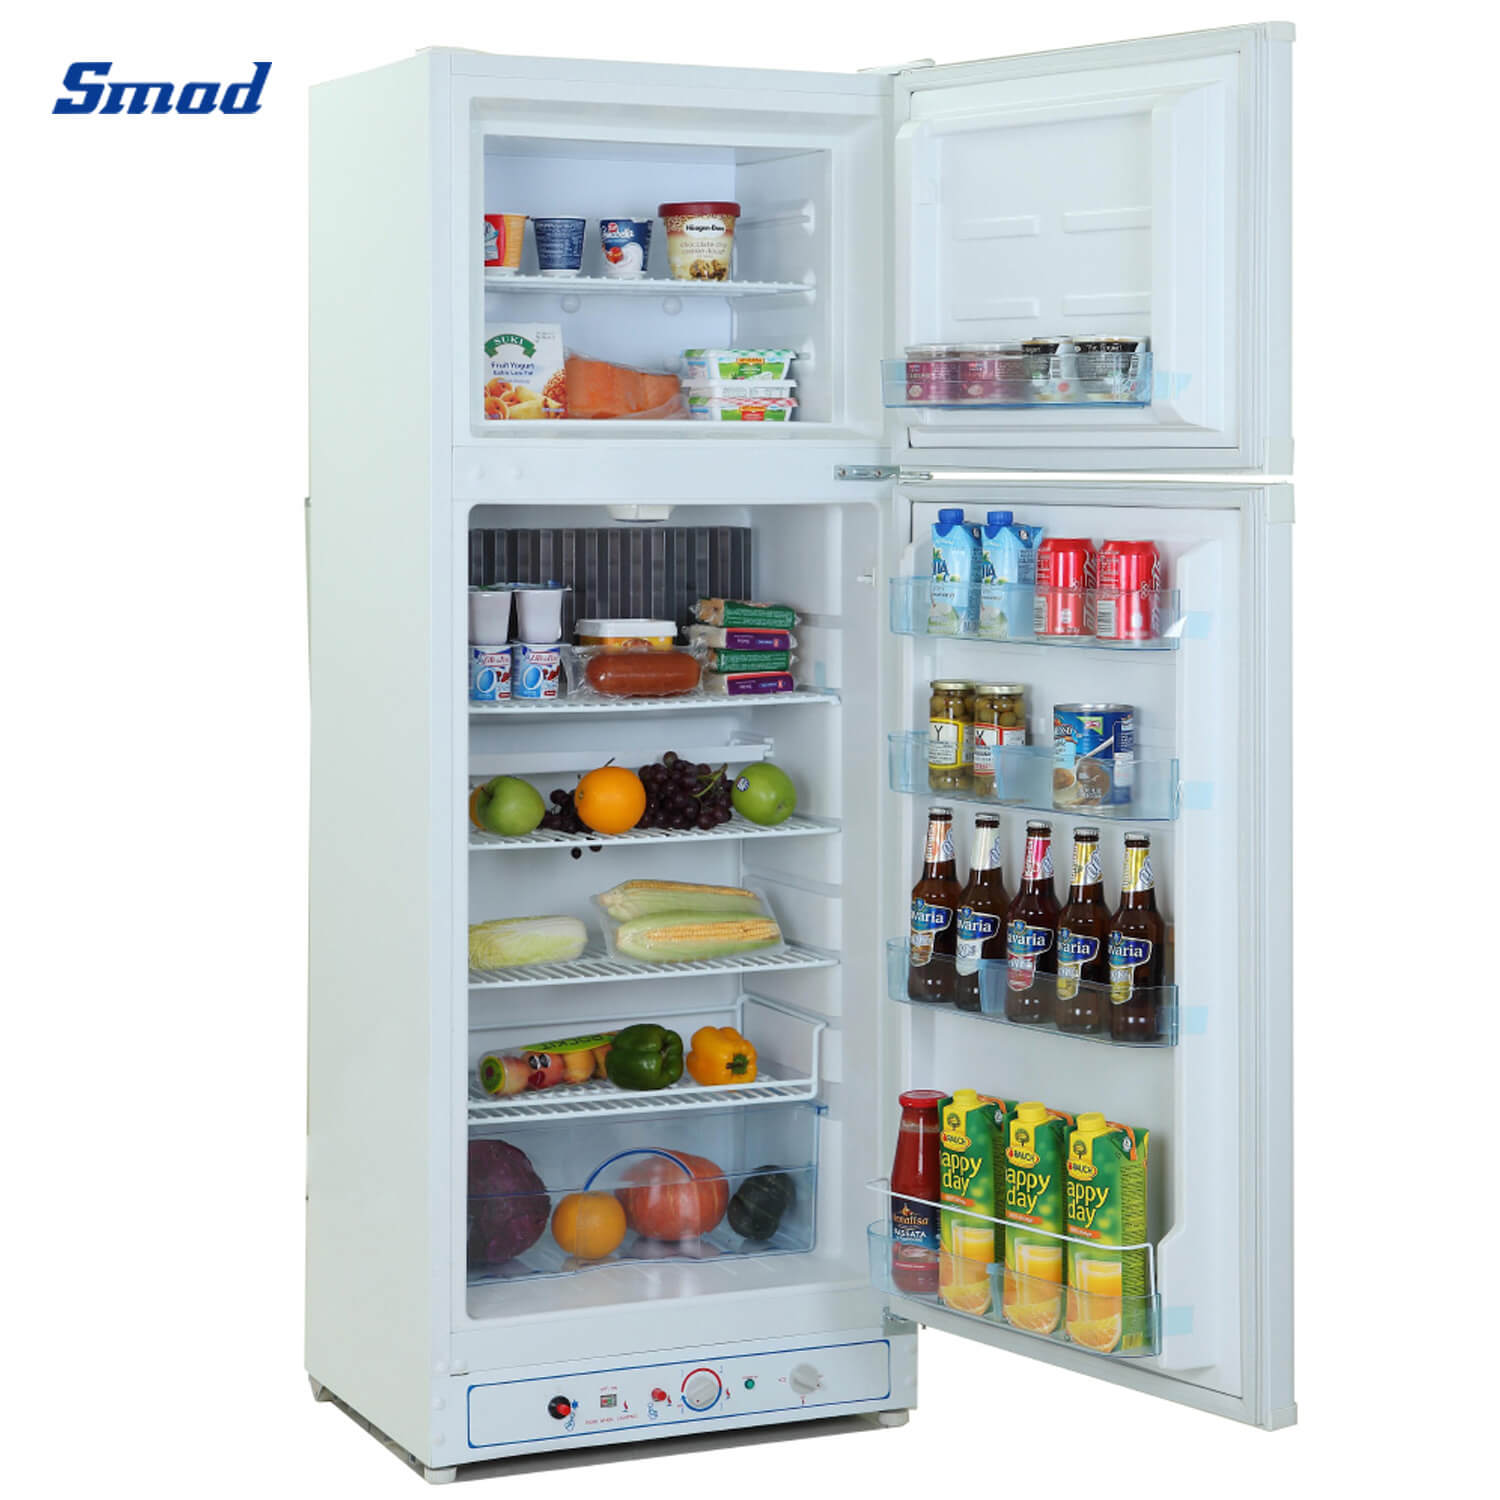 Smad 275L Gas / Propane Top Freezer Absorption Fridge Freezer with no noise